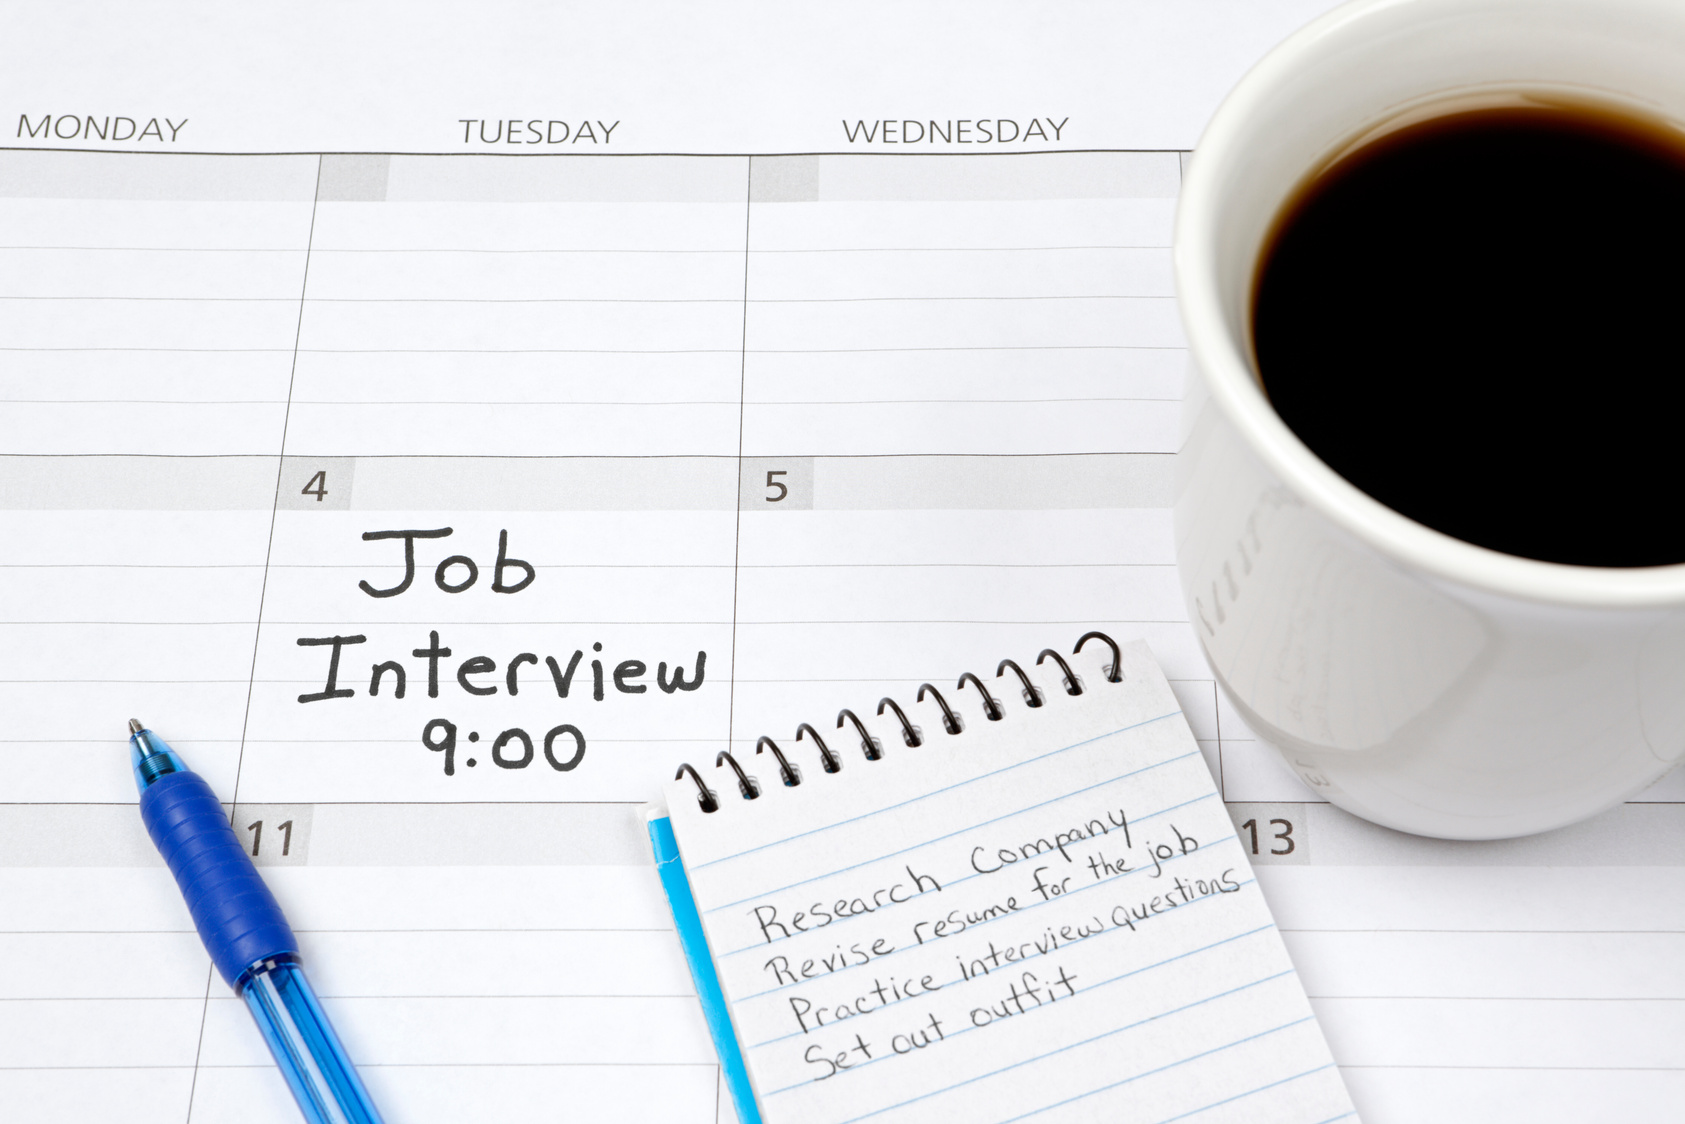 Preparing for Job Interview: Calendar and Plan